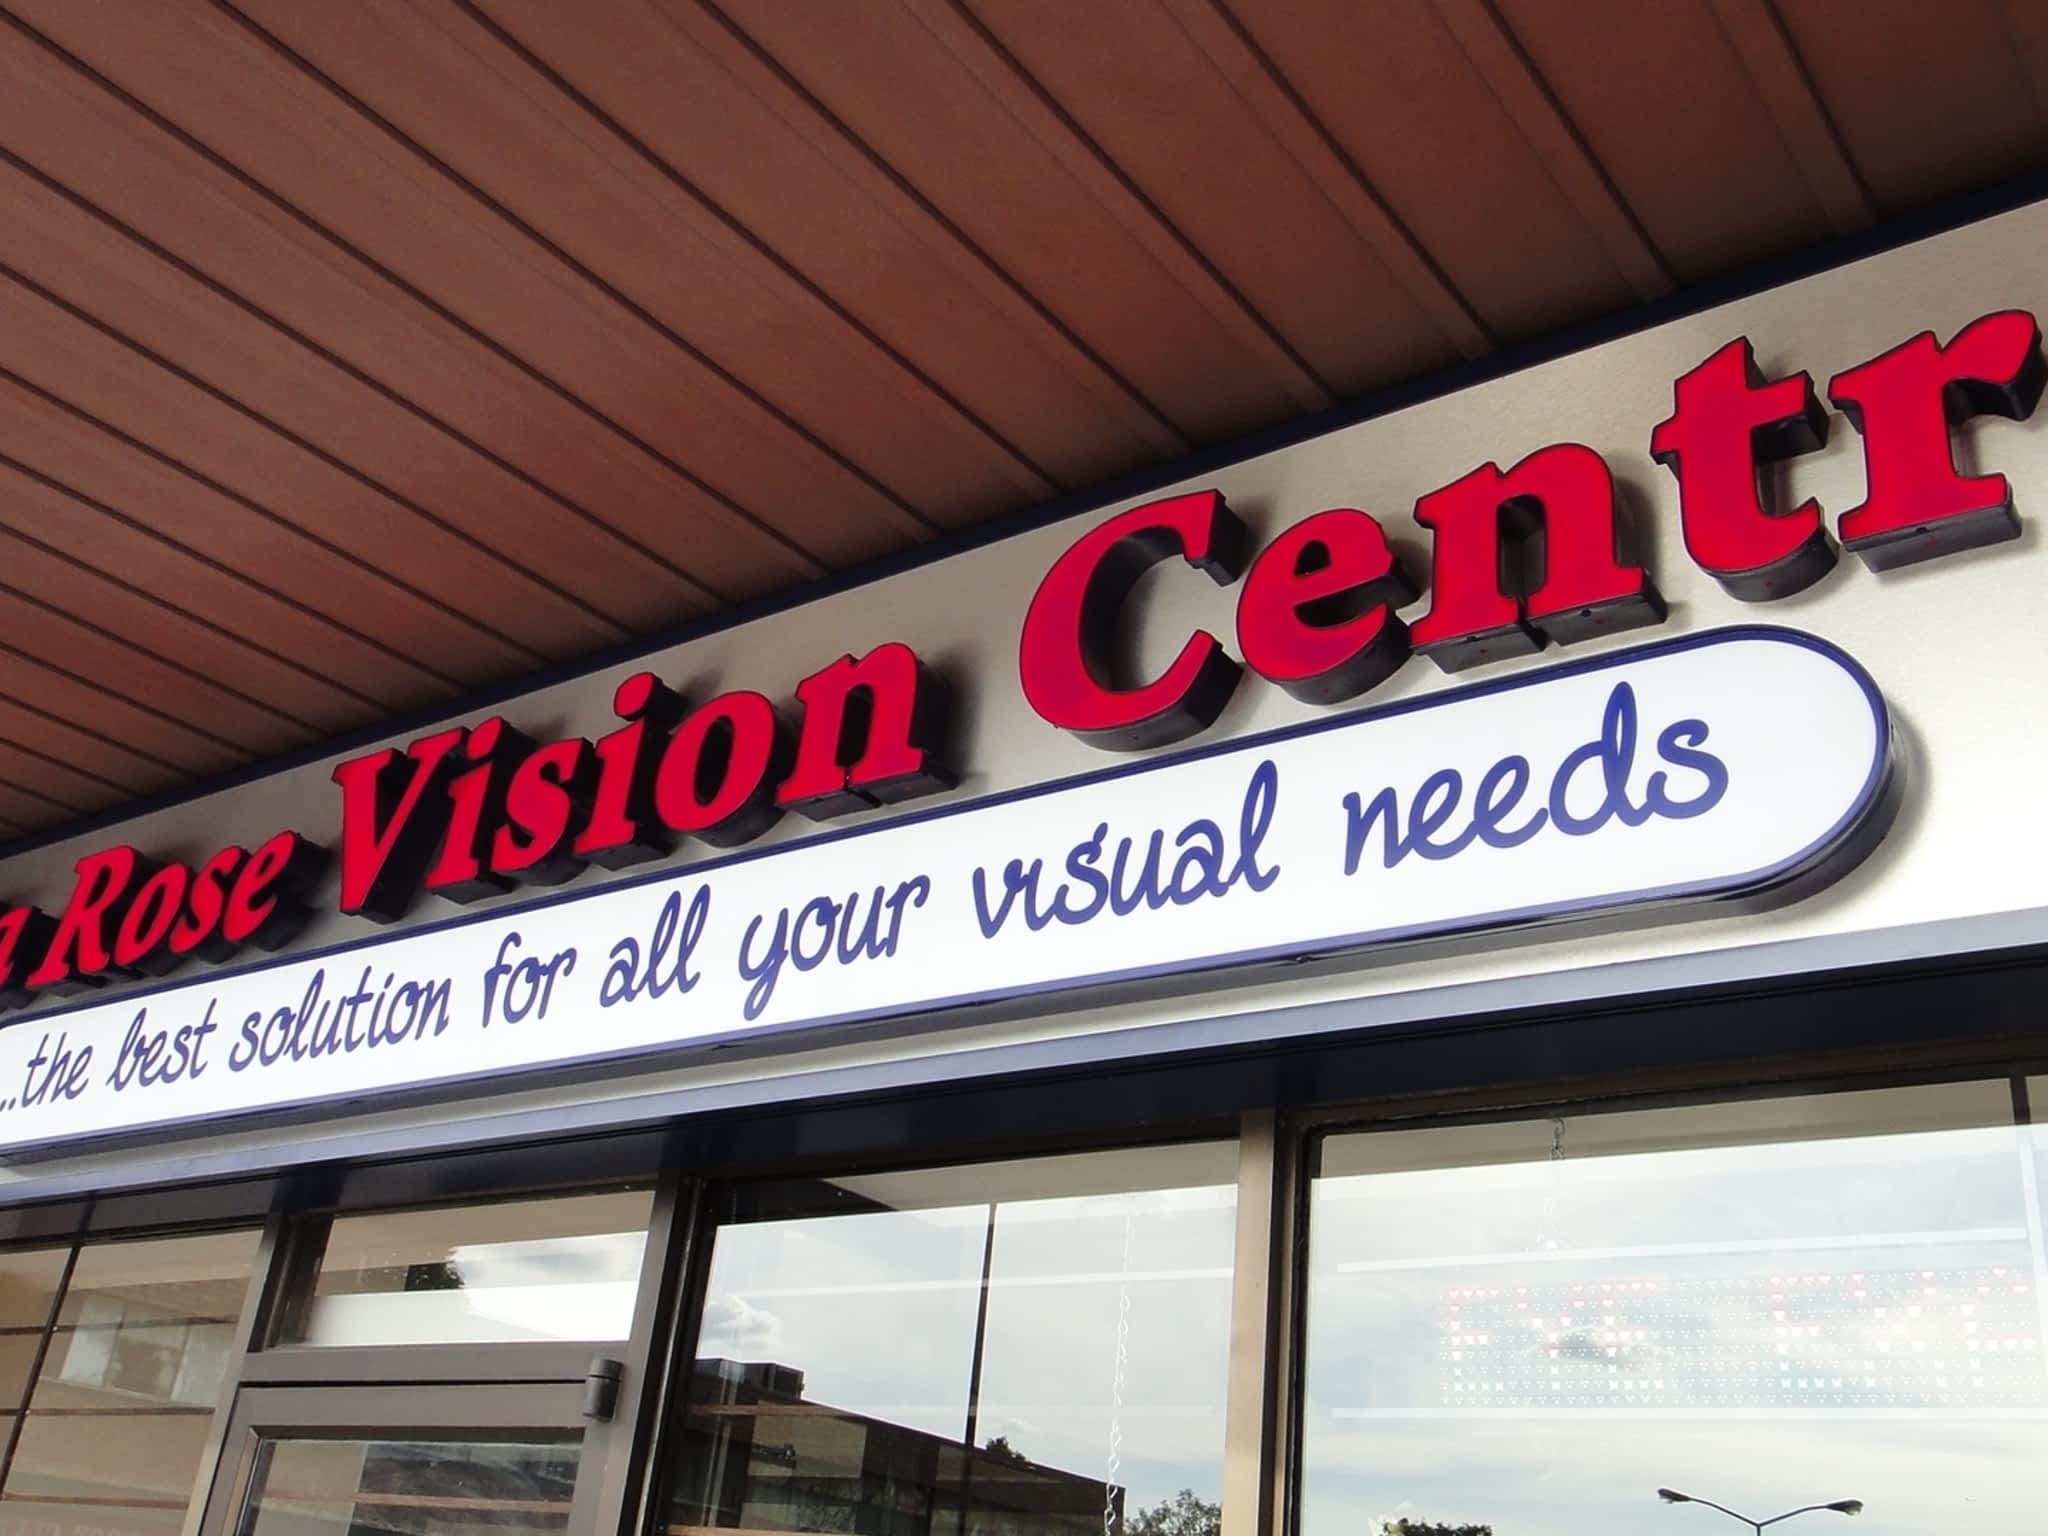 photo La Rose Vision Centre Inc